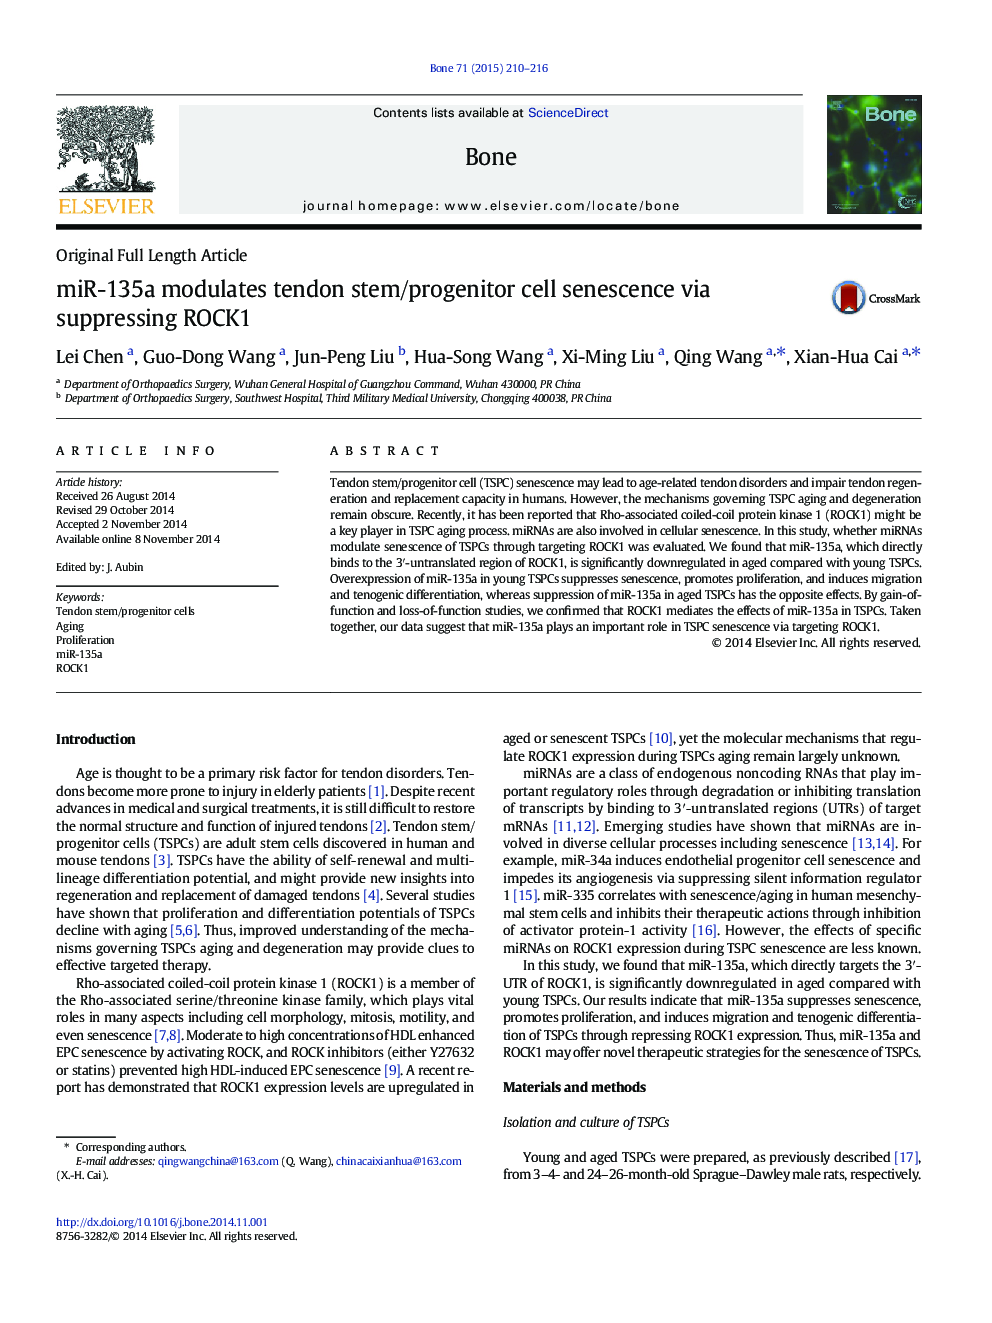 Original Full Length ArticlemiR-135a modulates tendon stem/progenitor cell senescence via suppressing ROCK1